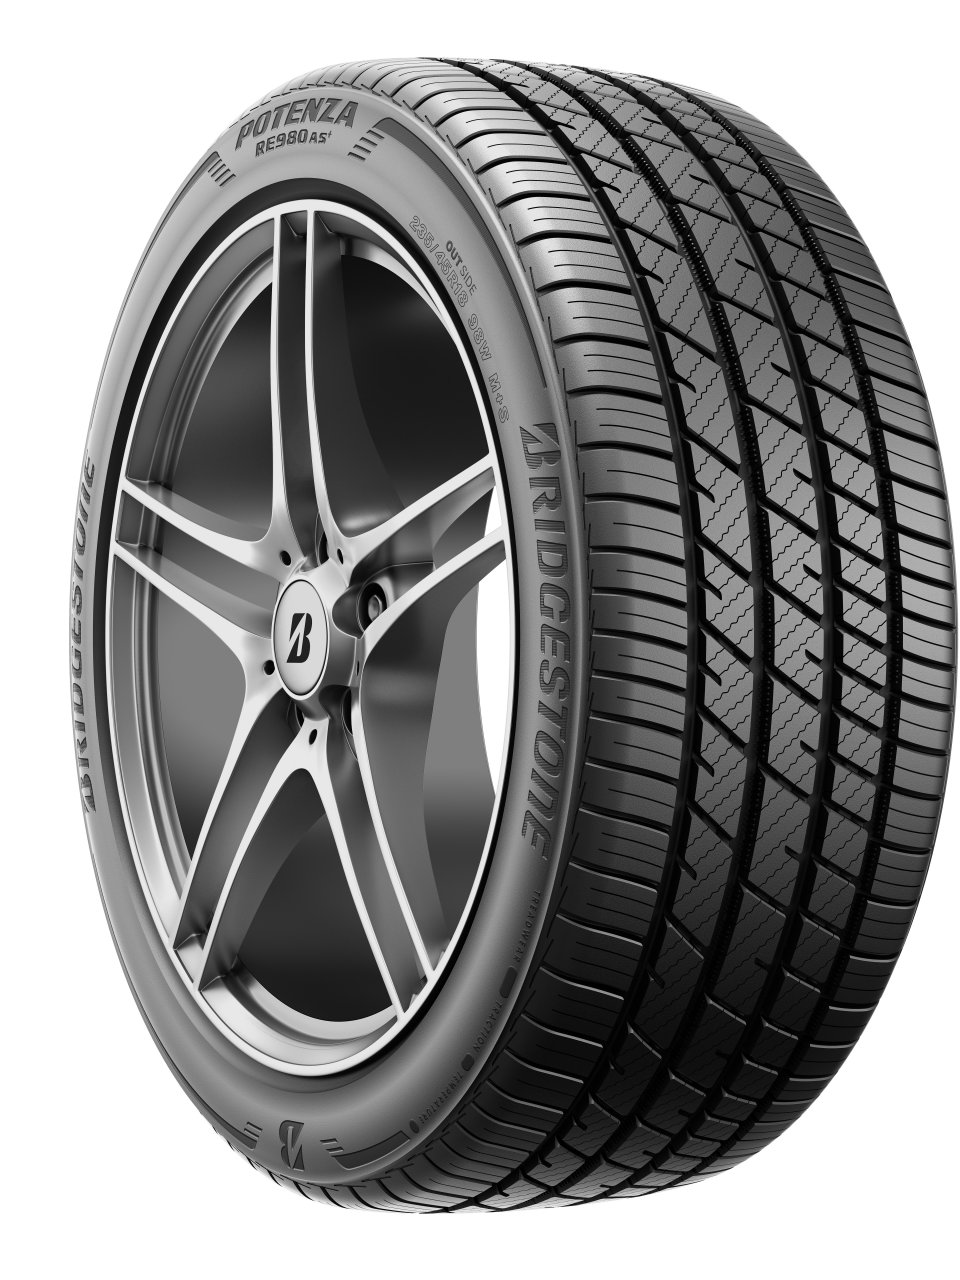 Bridgestone, Bridgestone unveils new generation of ultra-high-performance tires, ClassicCars.com Journal